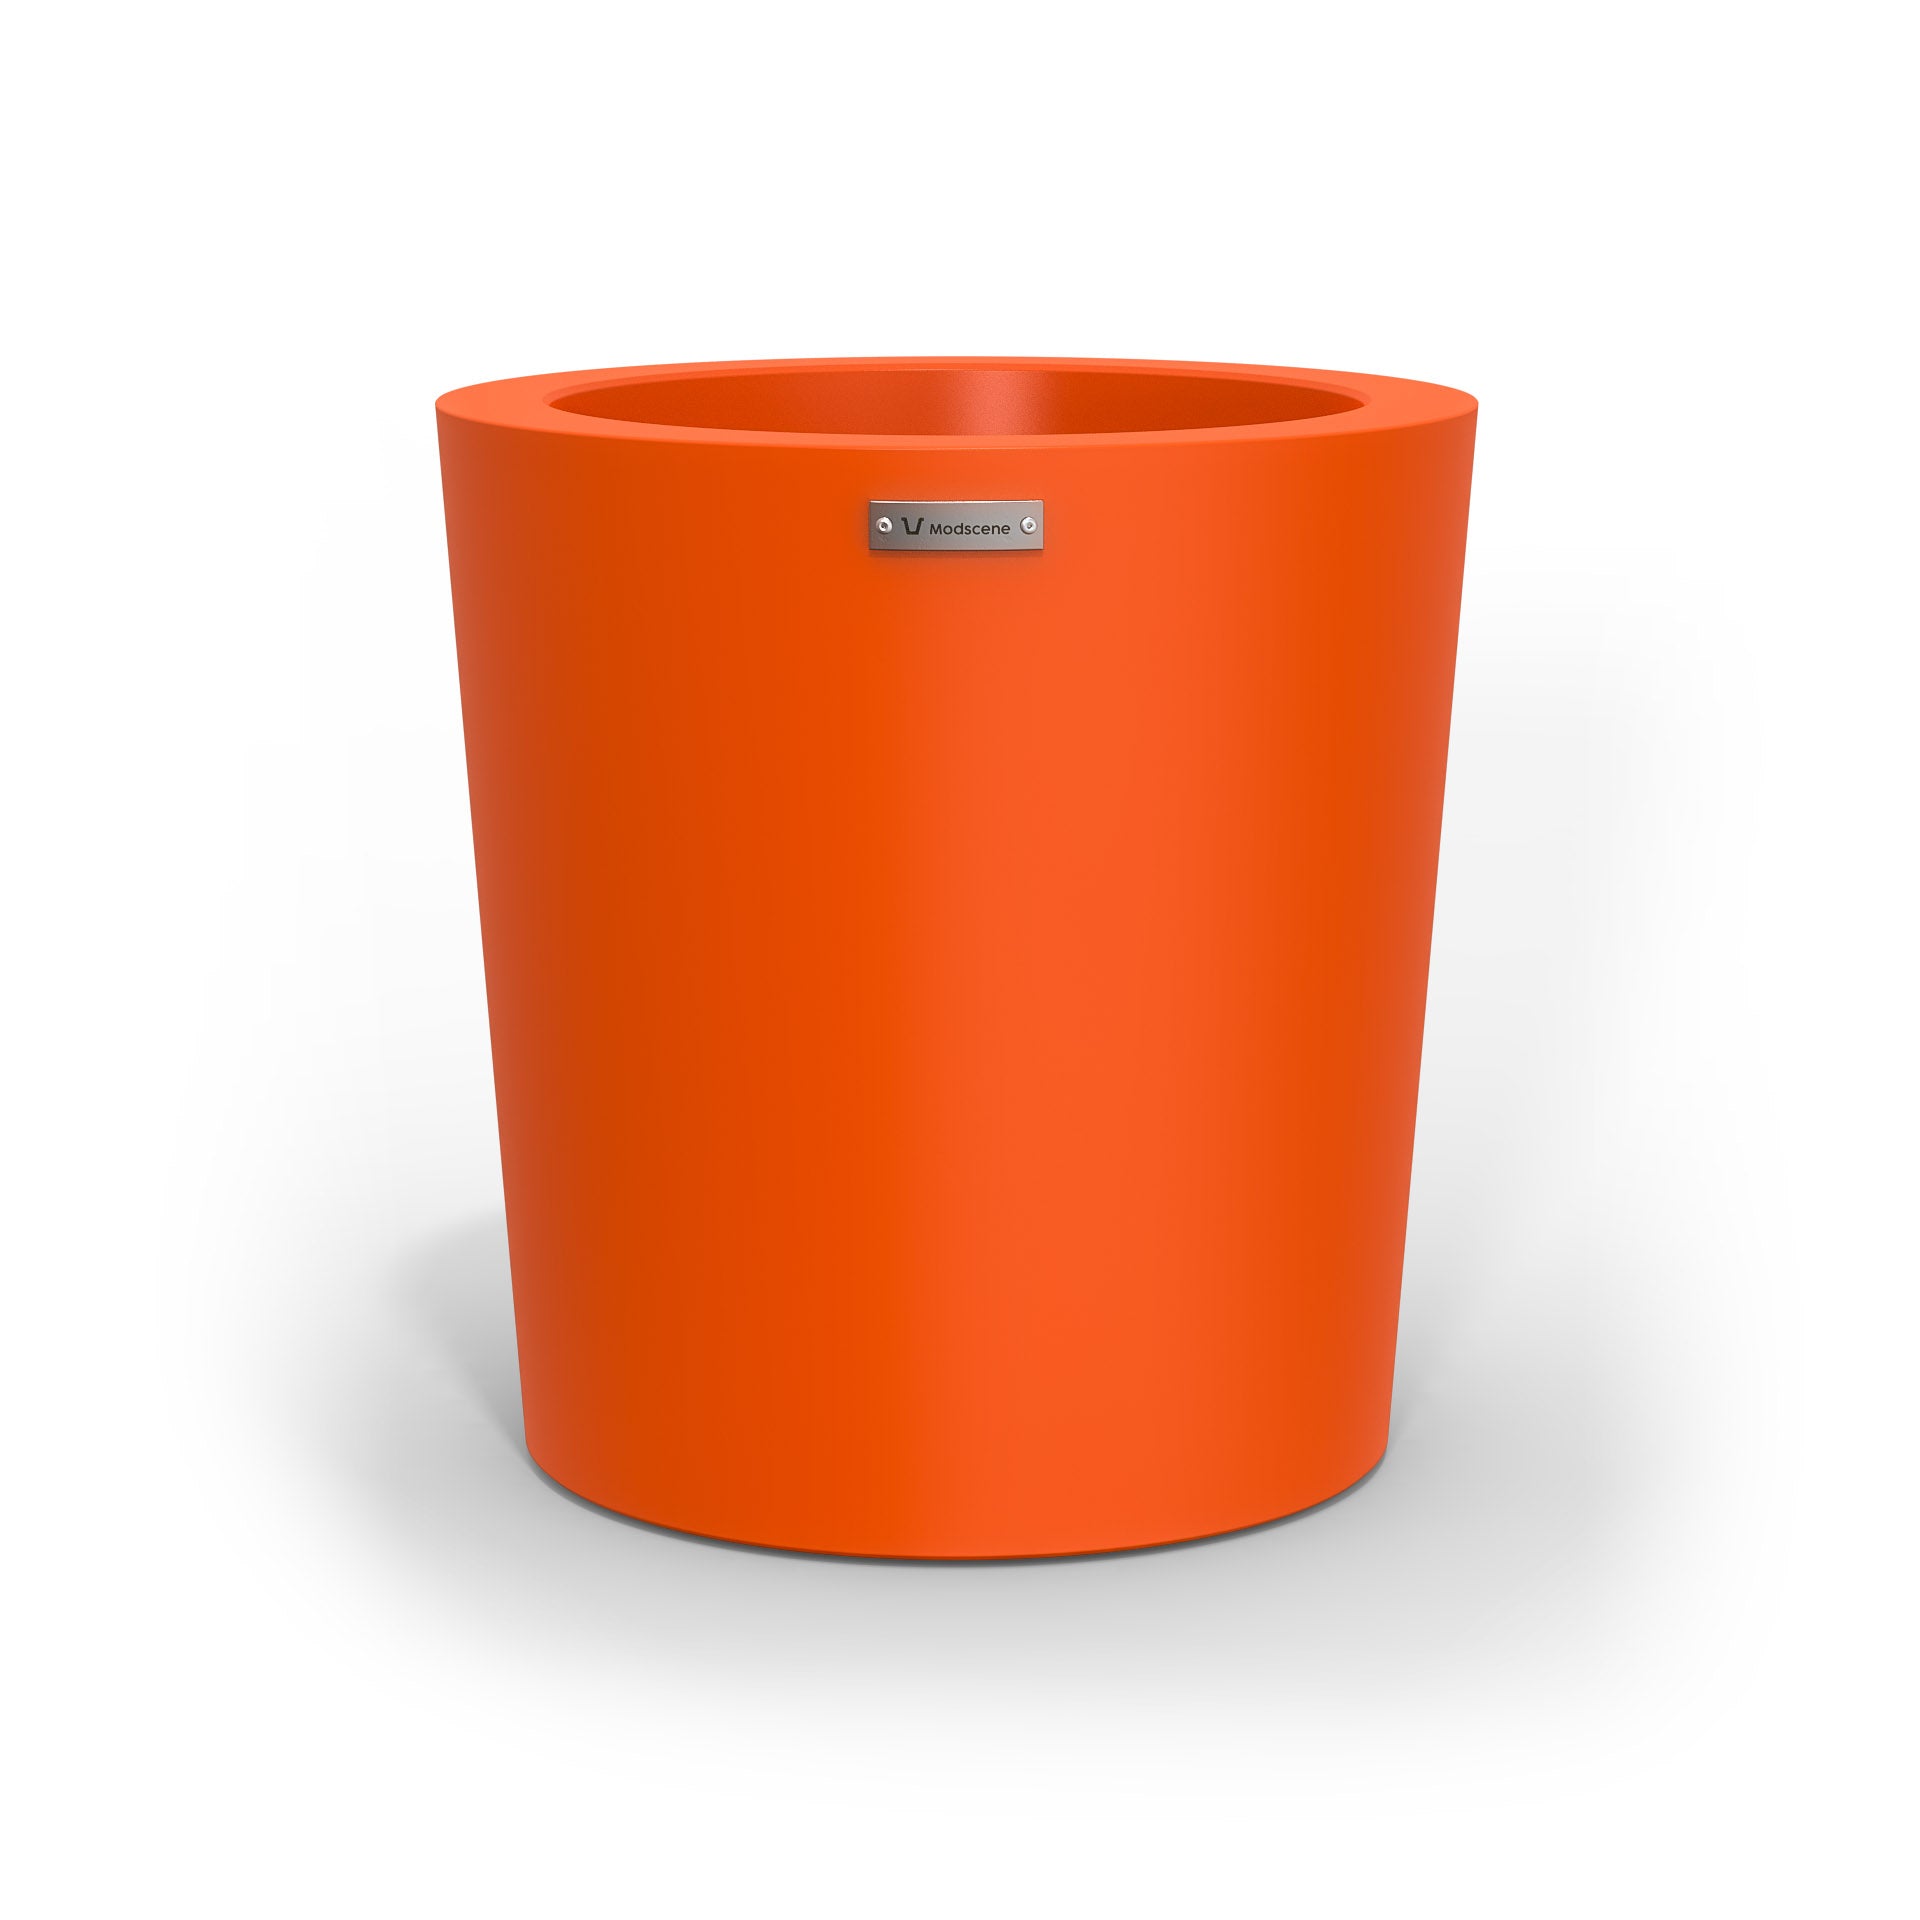 A modern style planter pot in orange. Made by Modscene New Zealand.